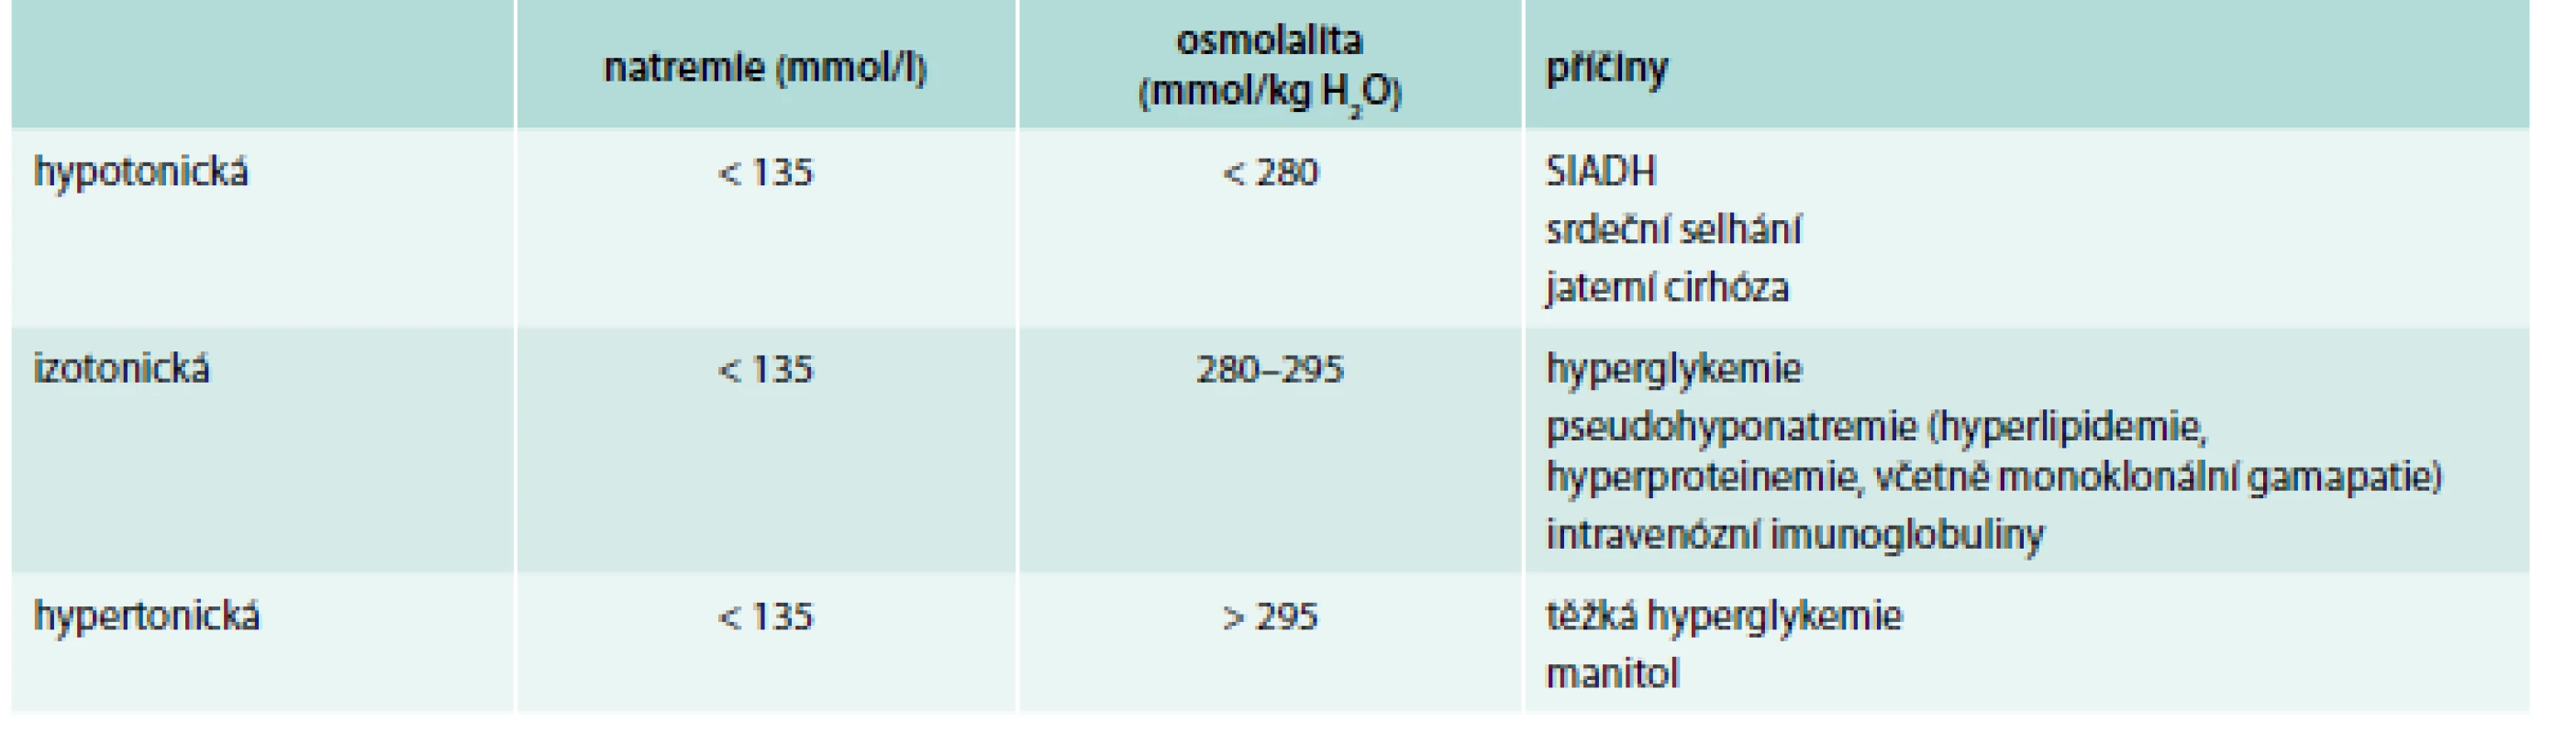 Klasifikace hyponatremie dle osmolality plazmy.